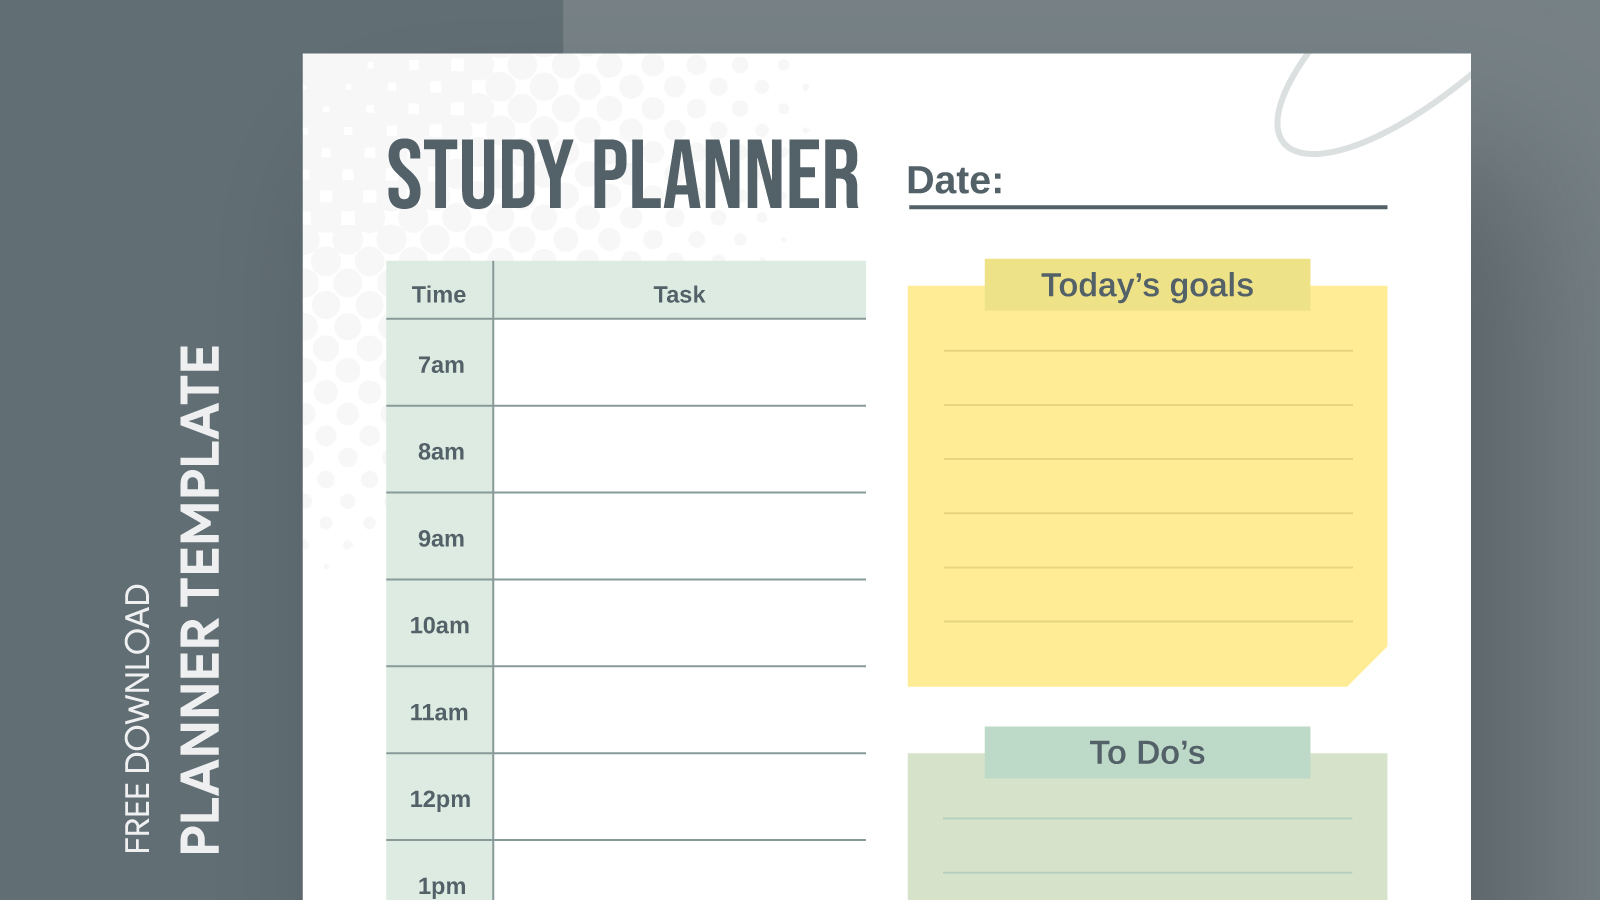 Study Planner Free Google Docs Template gdoc.io